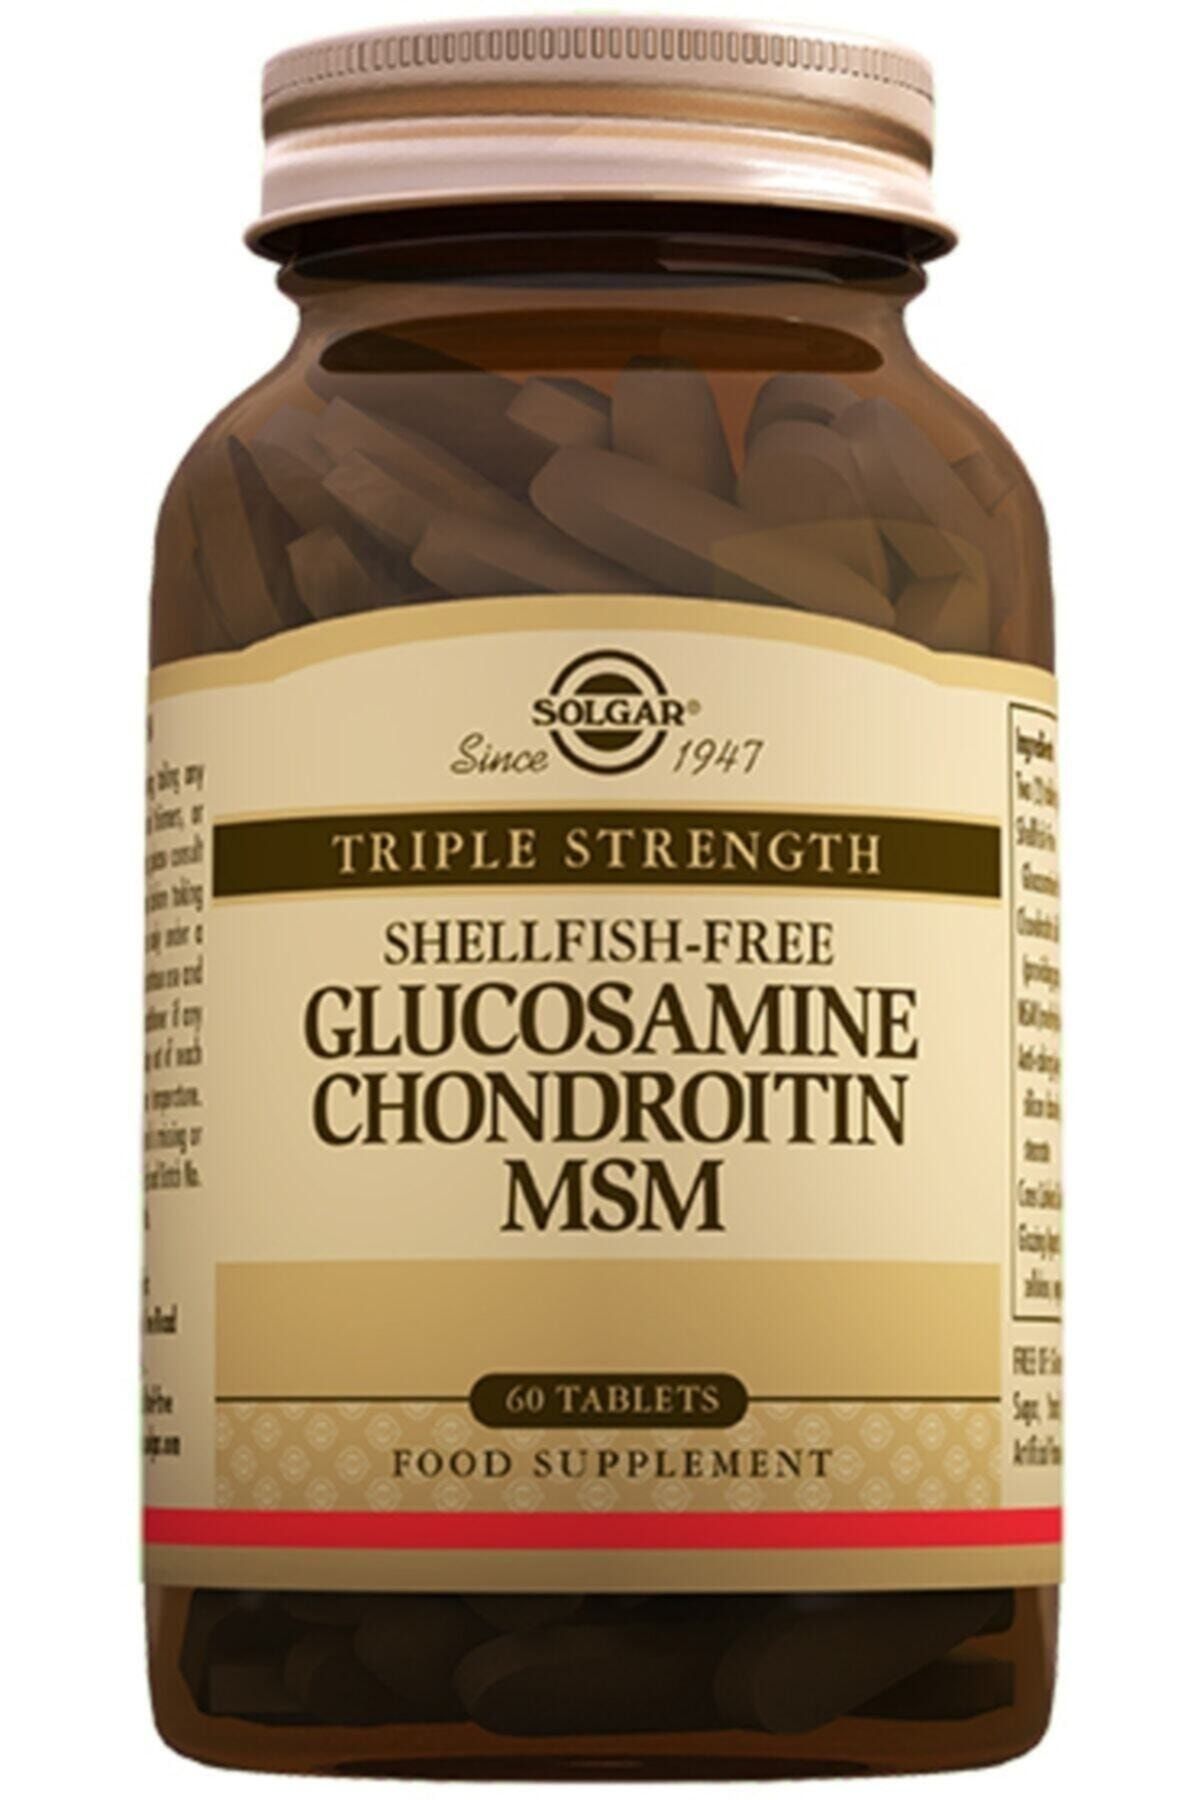 Solgar Glucosamine Chondroitin Msm 60 Tablet (GLUKOZAMİN KONDROİTİN MSM 60)